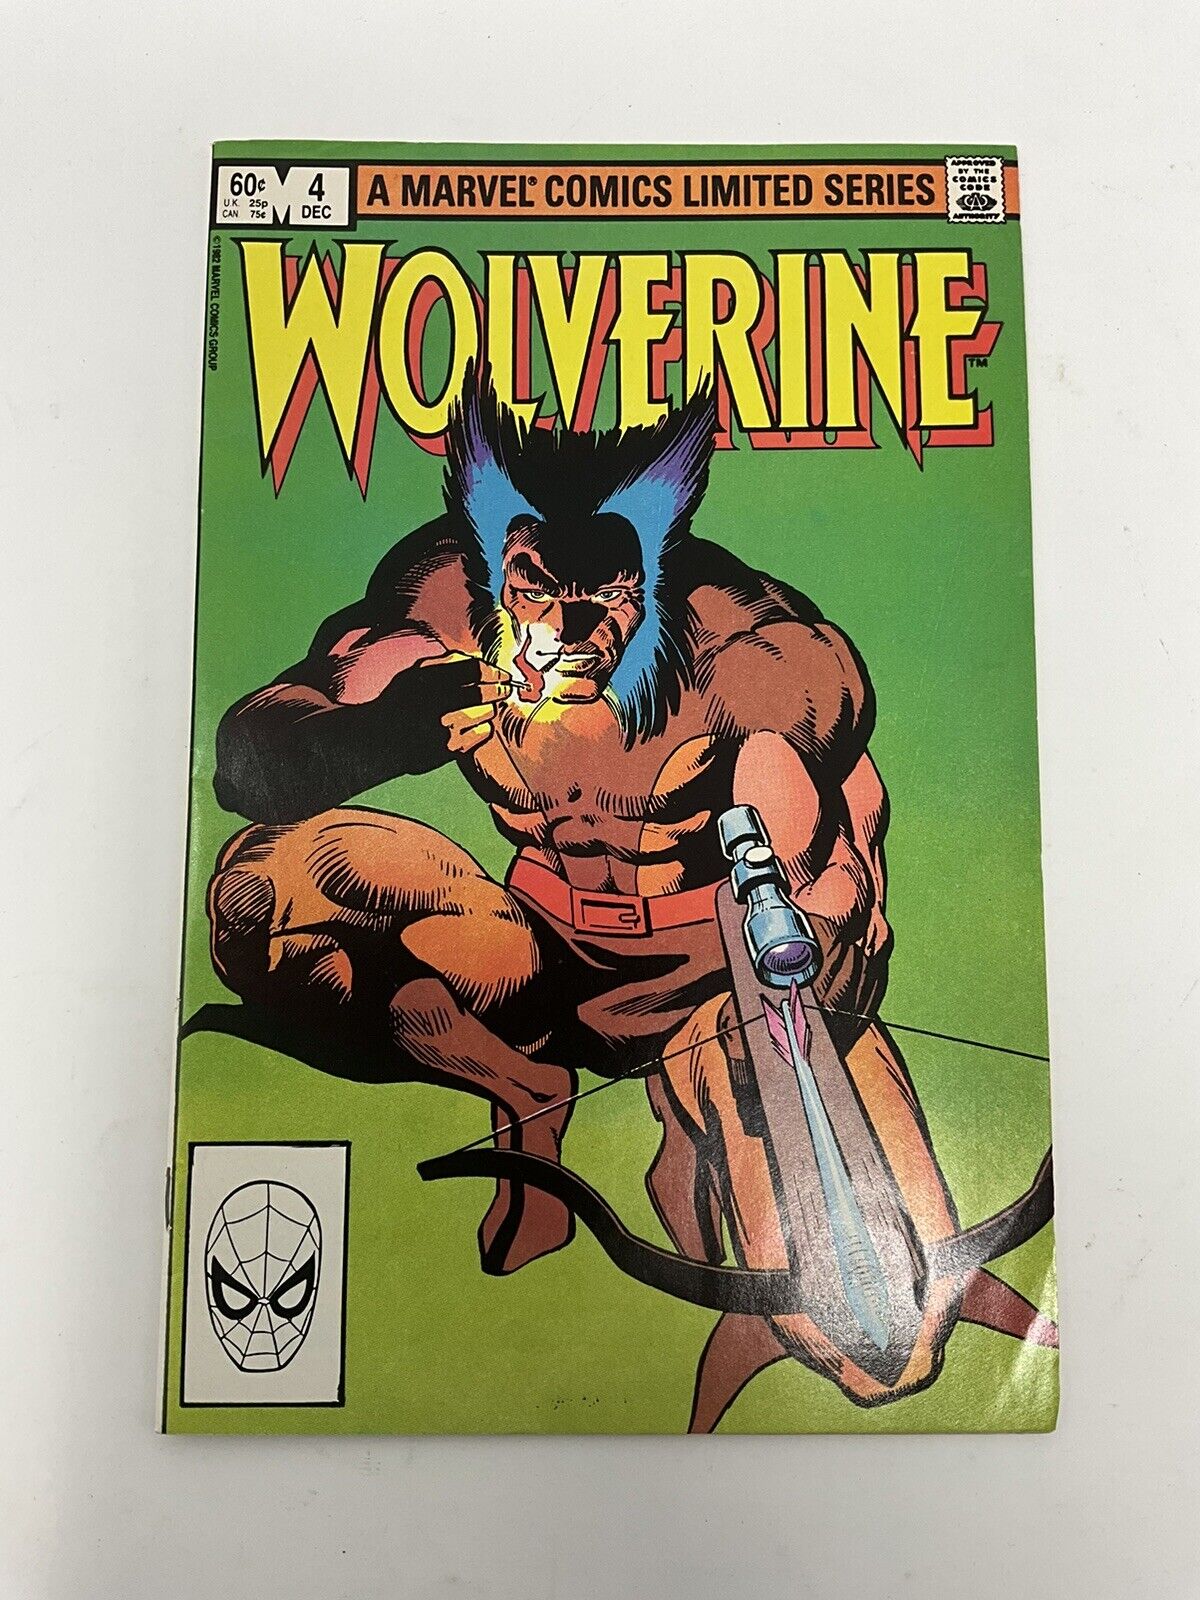 WOLVERINE #4 1982 1st Wolverine Solo/Limited Series Frank Miller HIGH GRADE 9.6!